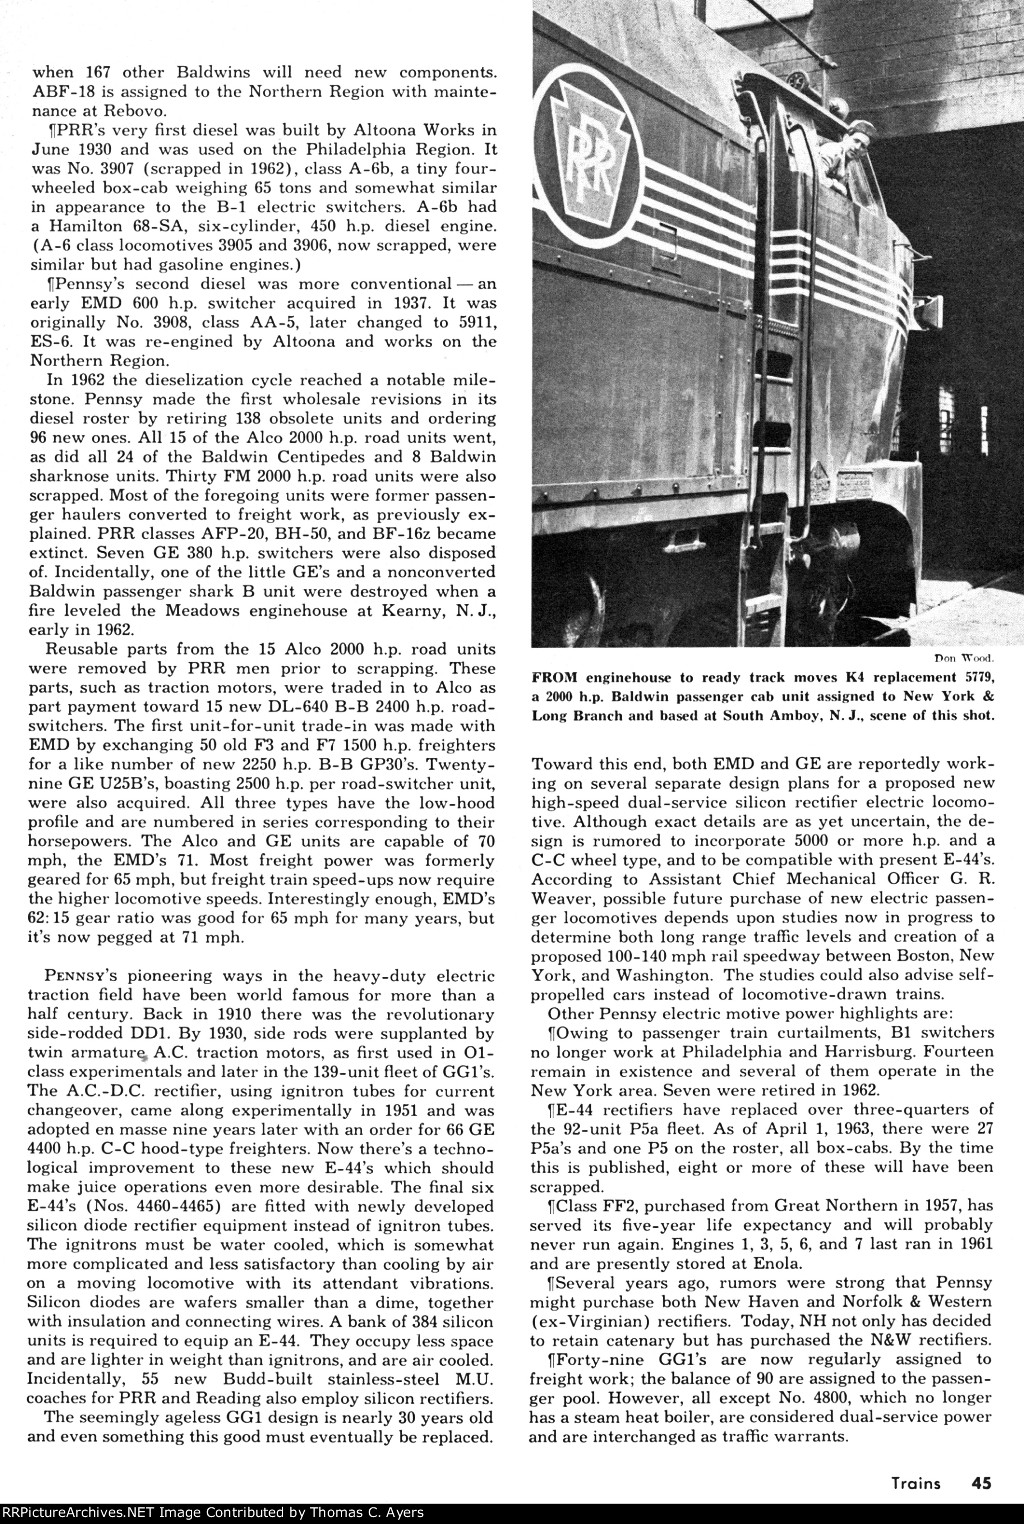 "Largest Locomotive Fleet," Page 45, 1964